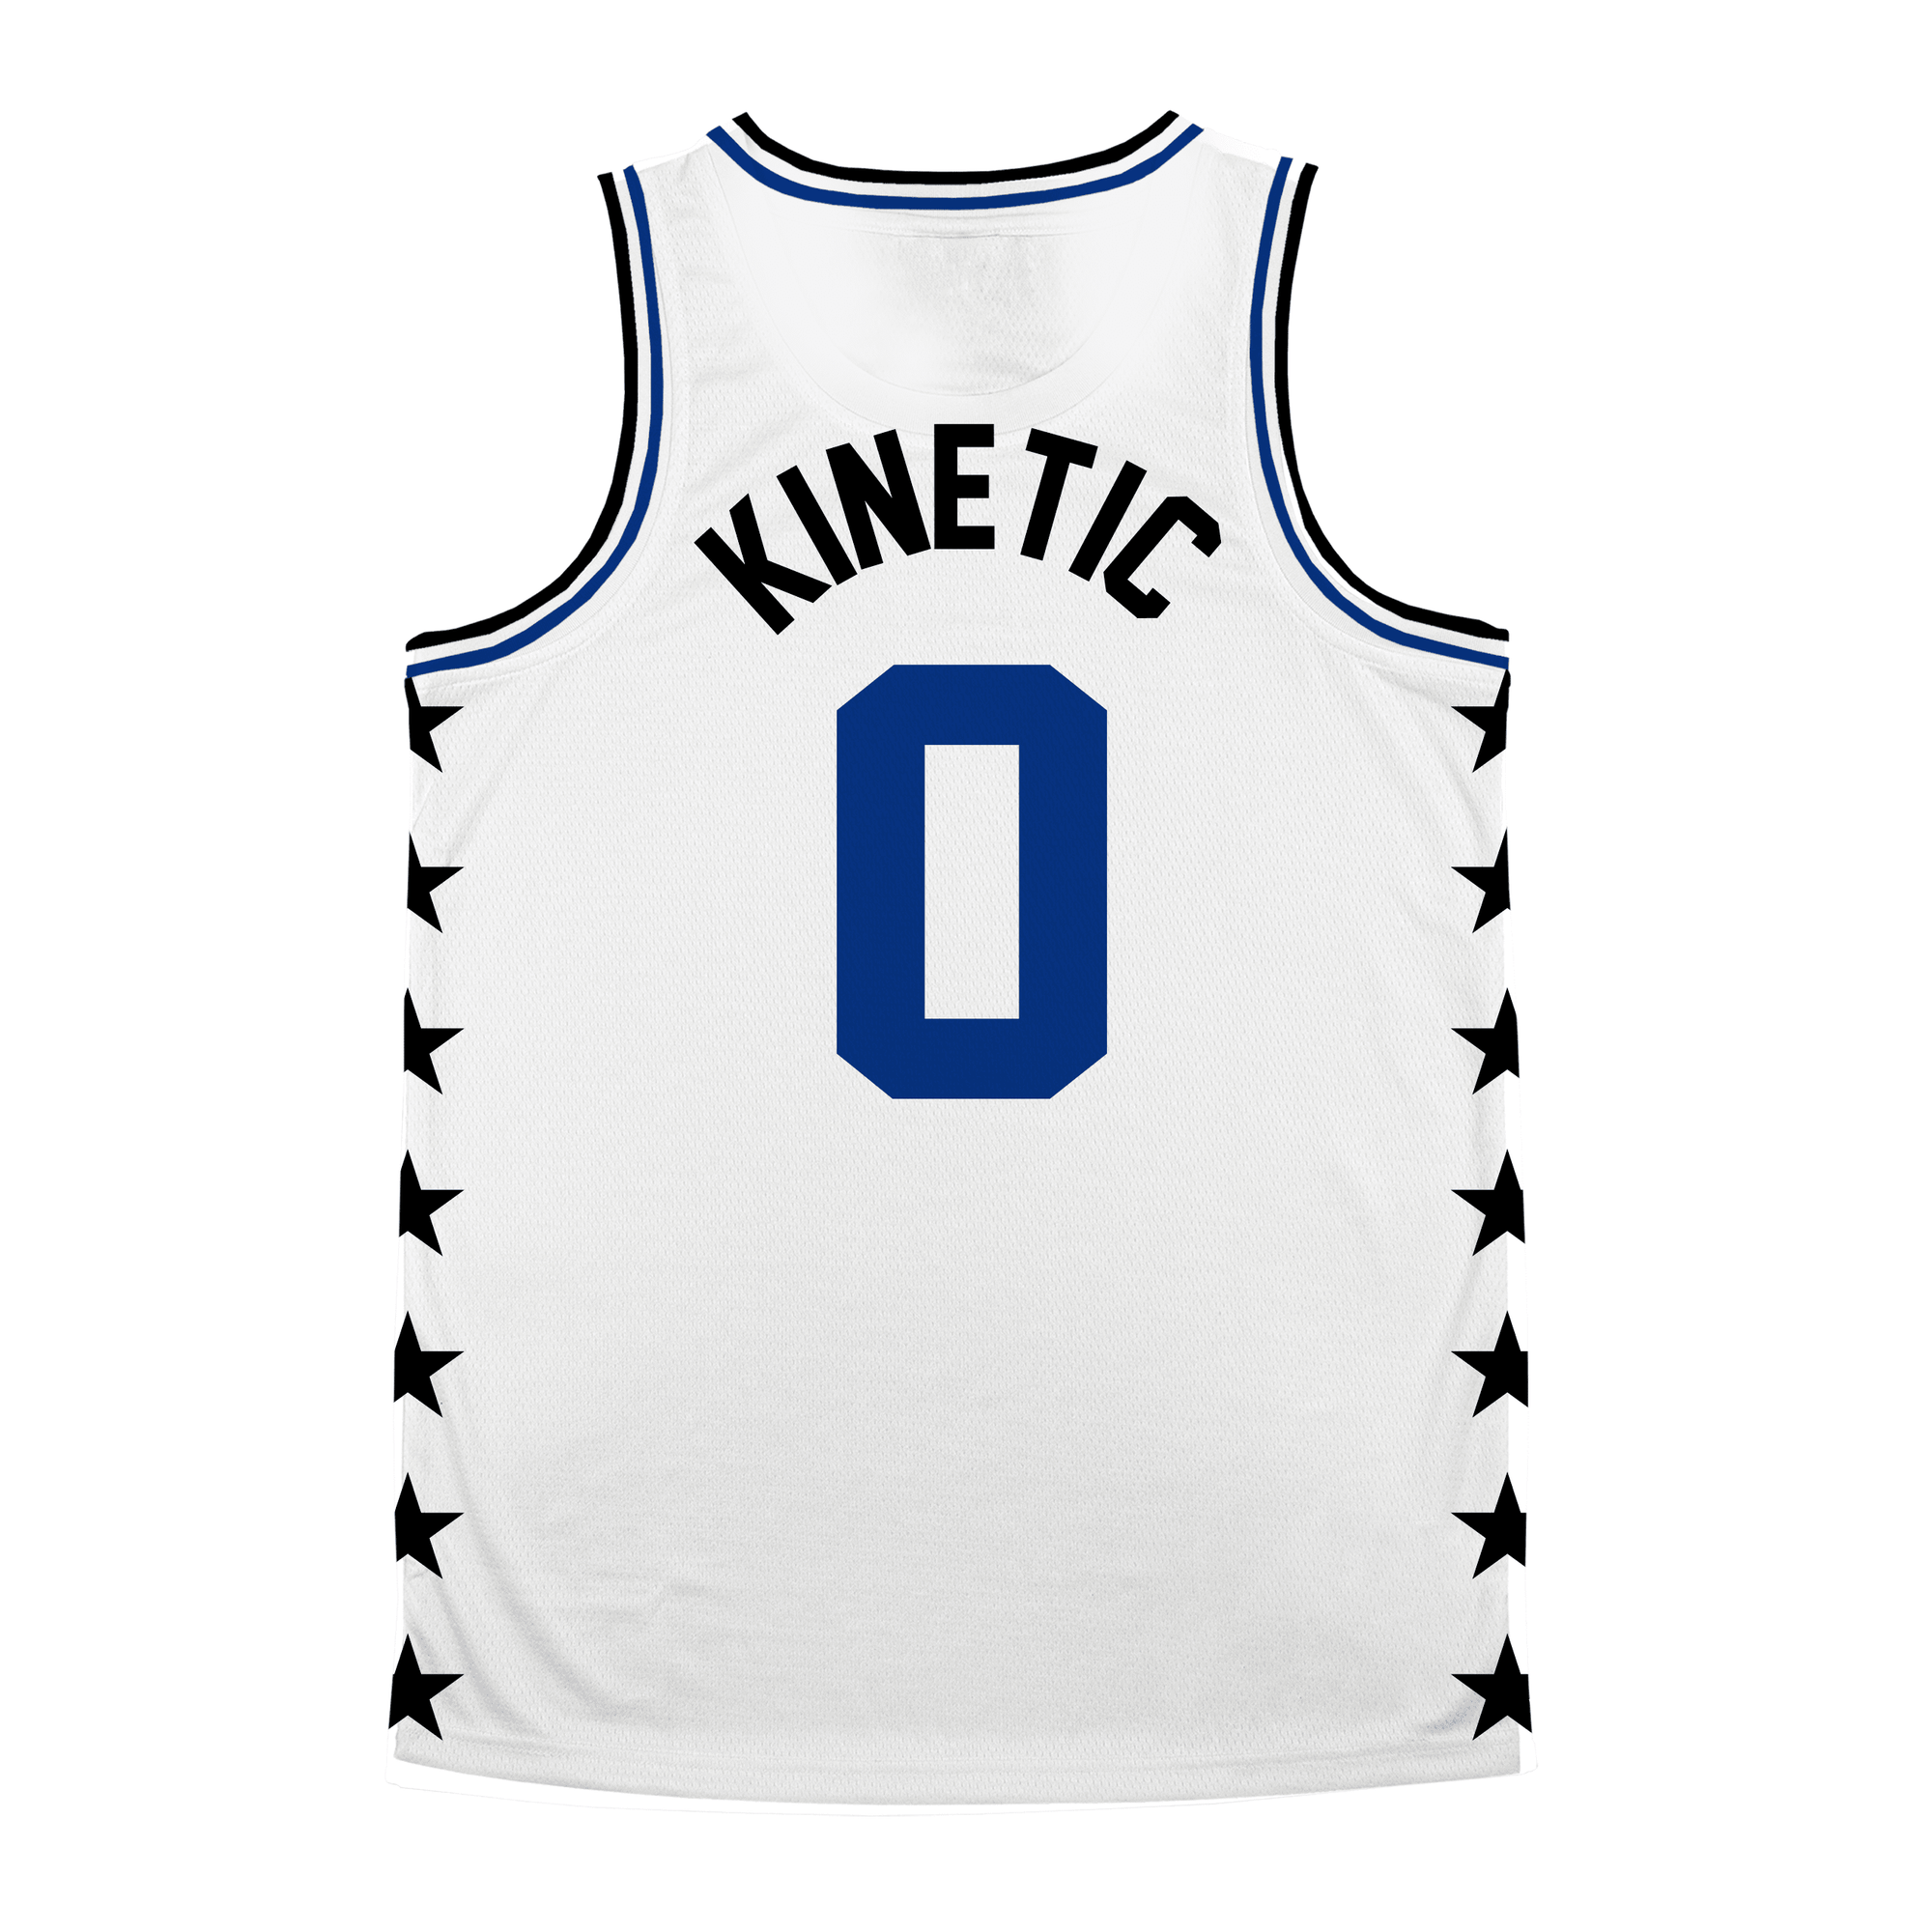 Kappa Sigma - Black Star Basketball Jersey